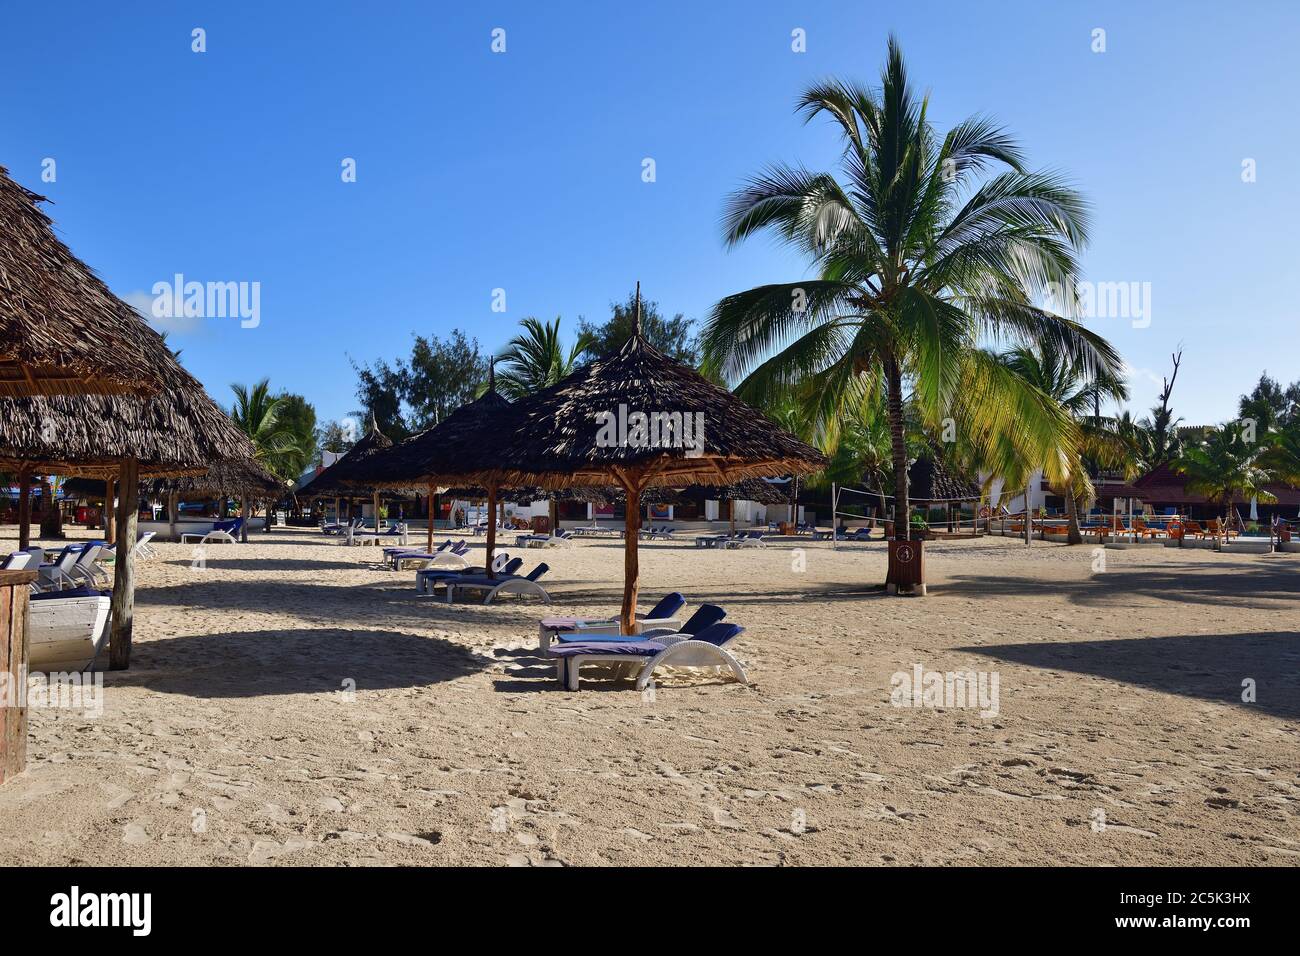 Kendwa, Zanzibar - October 6, 2019: Kendwa rocks beach resort very popular place located on one of Zanzibar top beaches Stock Photo